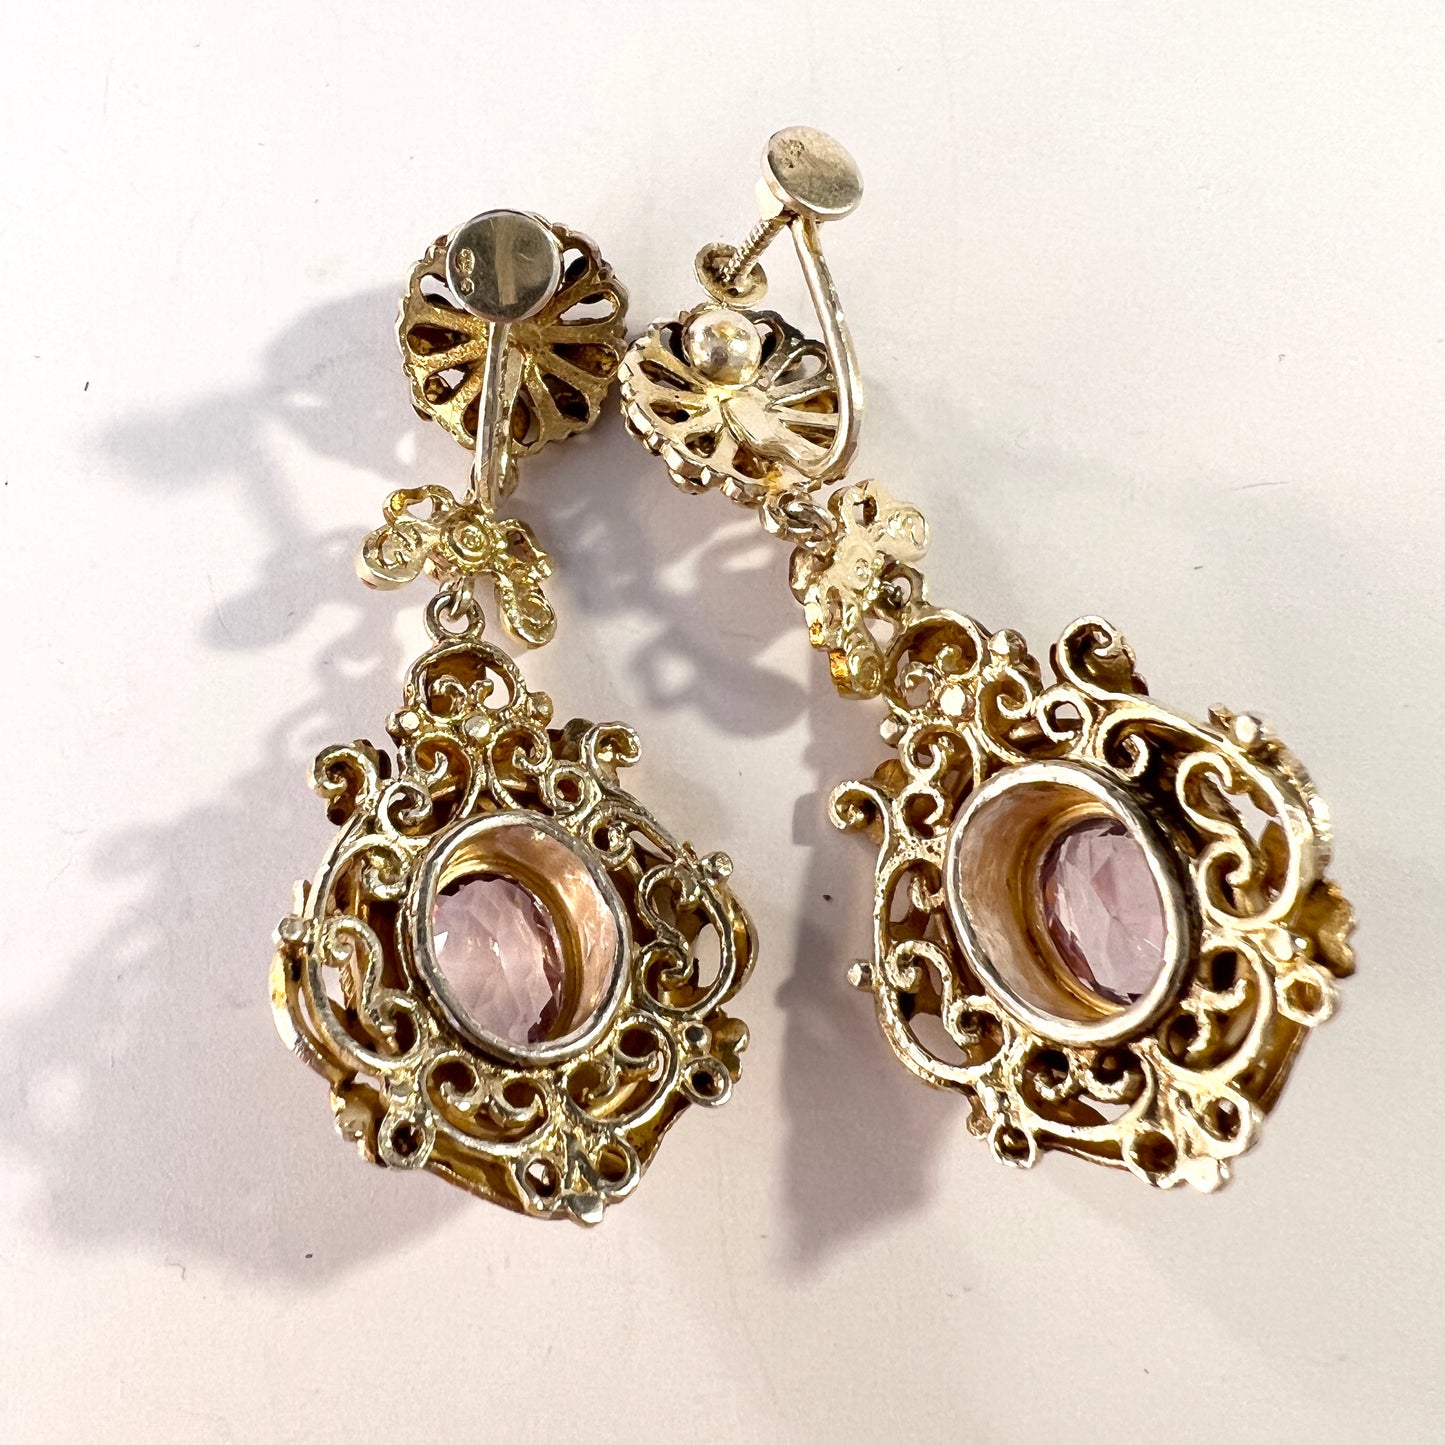 Austria / Hungary early 1900s Sterling Silver Enamel Amethyst Pearl Large Earrings.